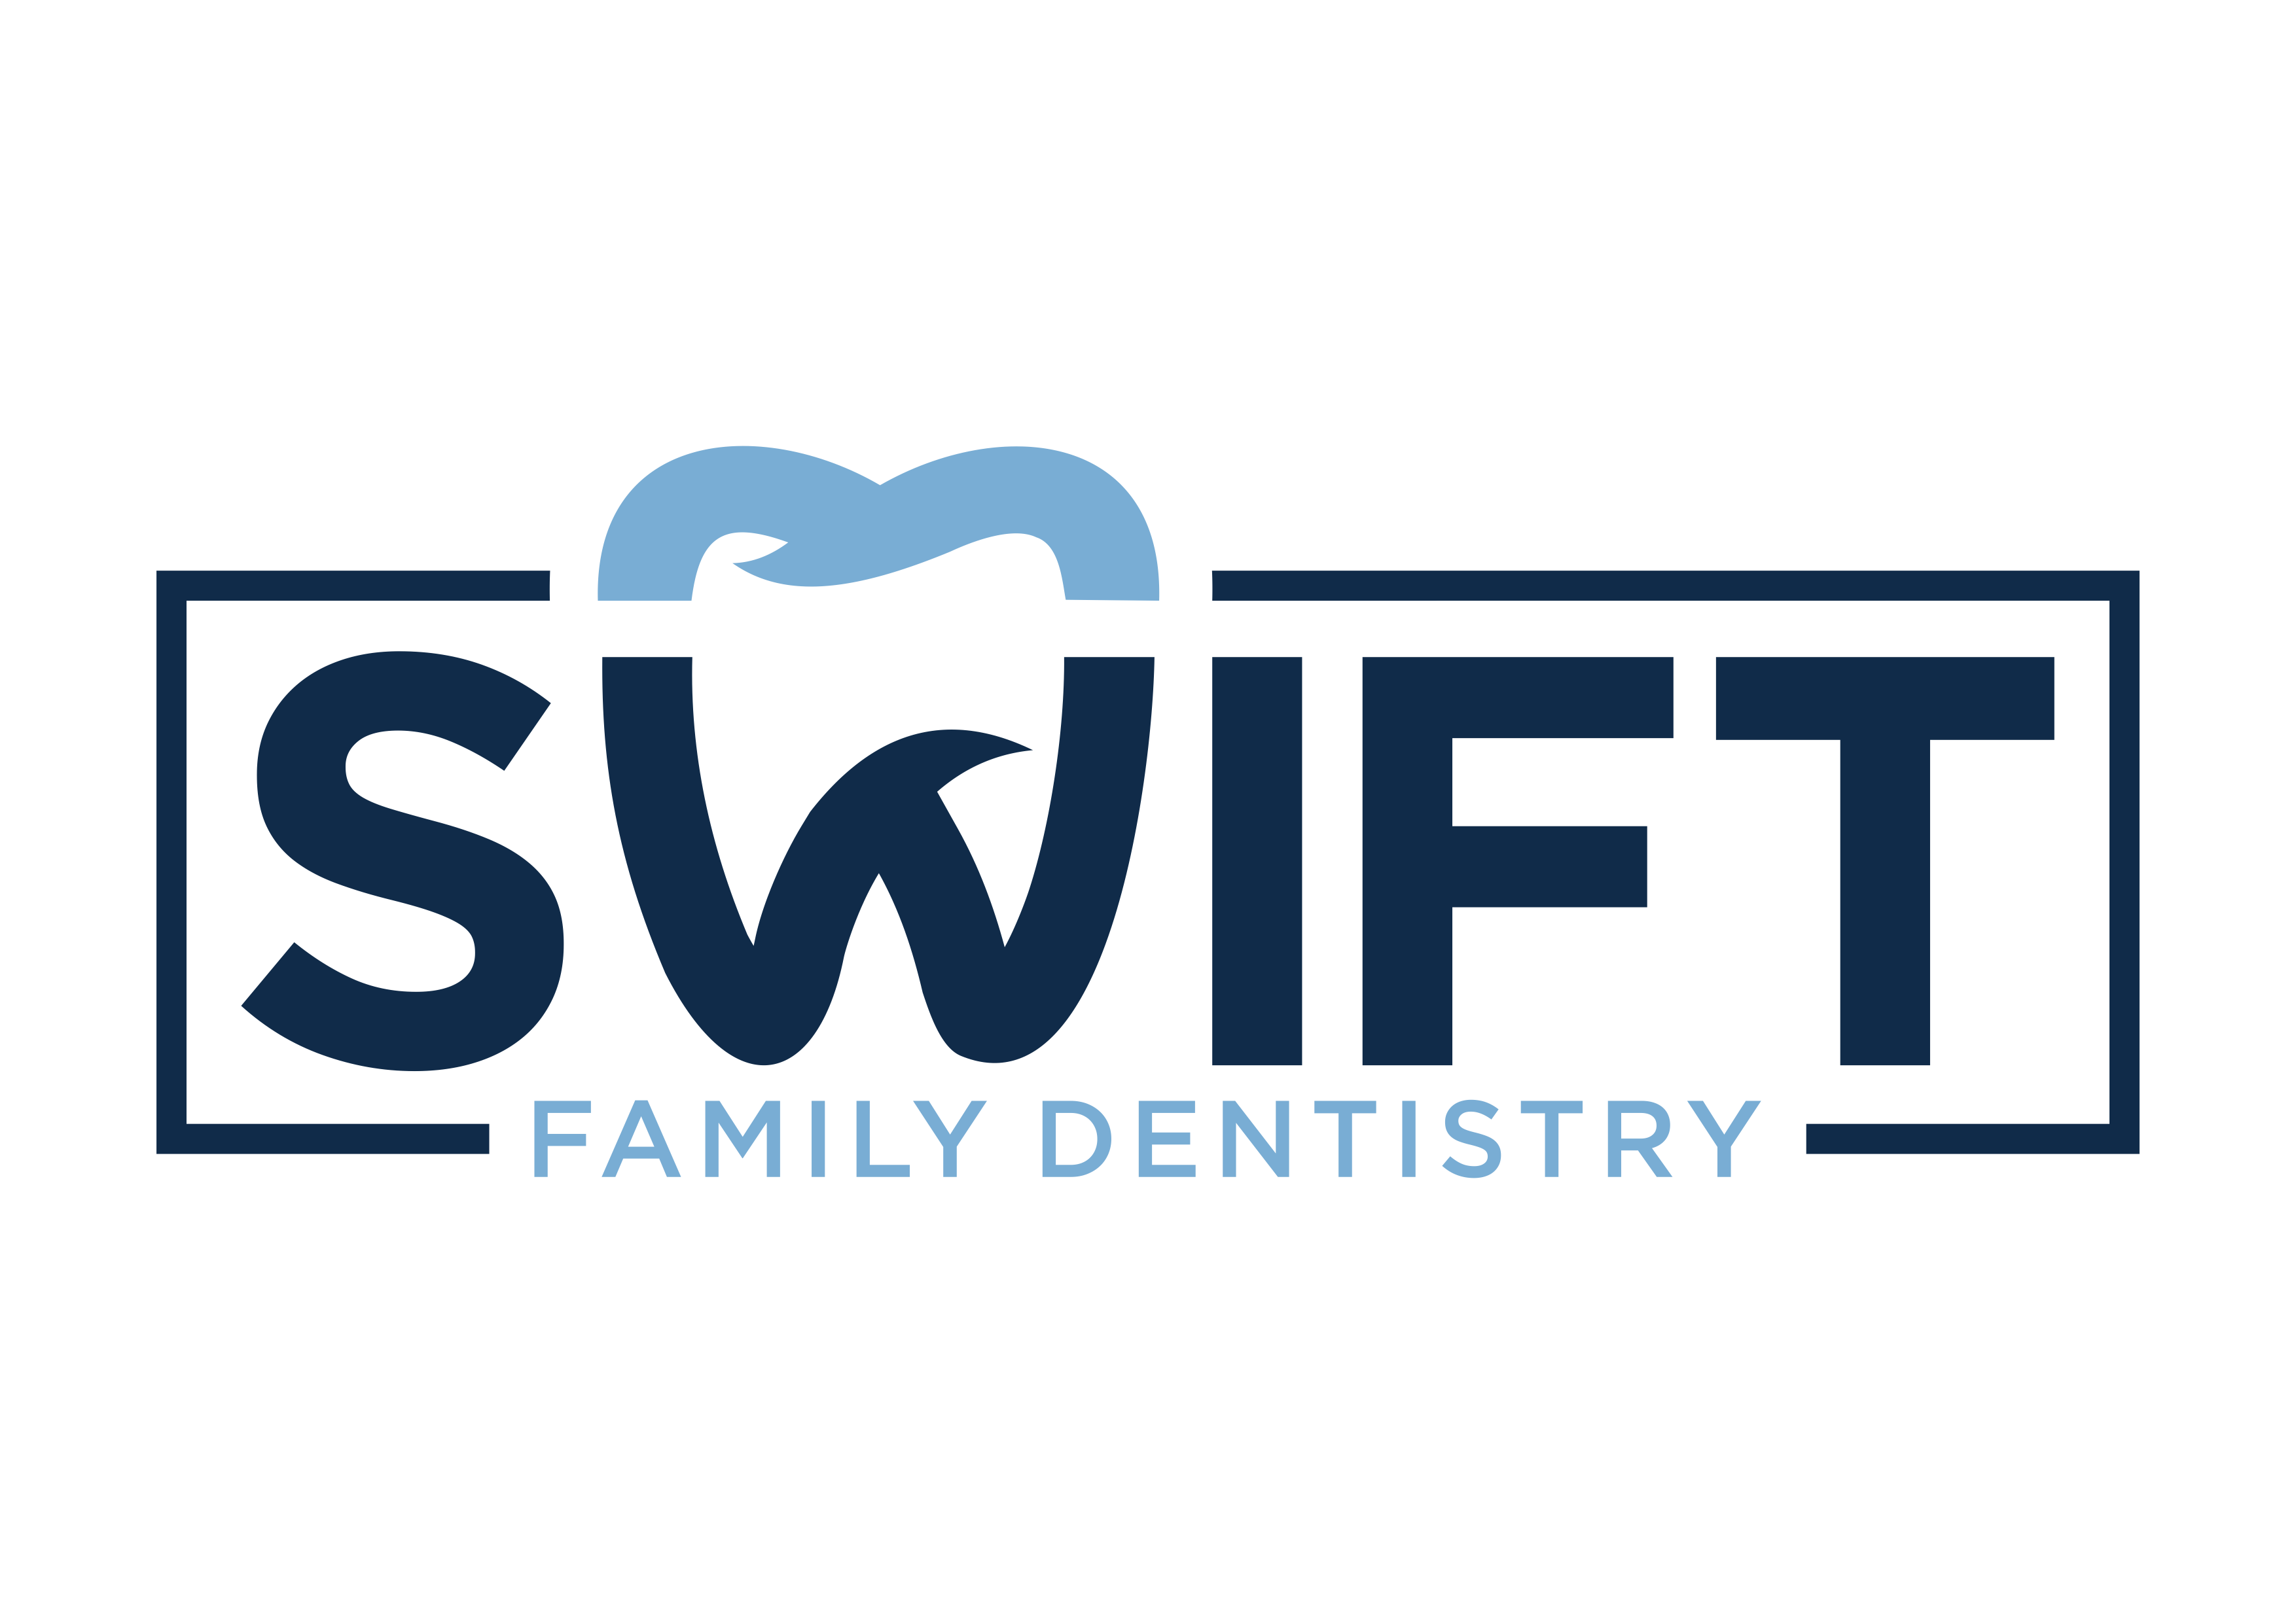 Swift Family Dentistry logo